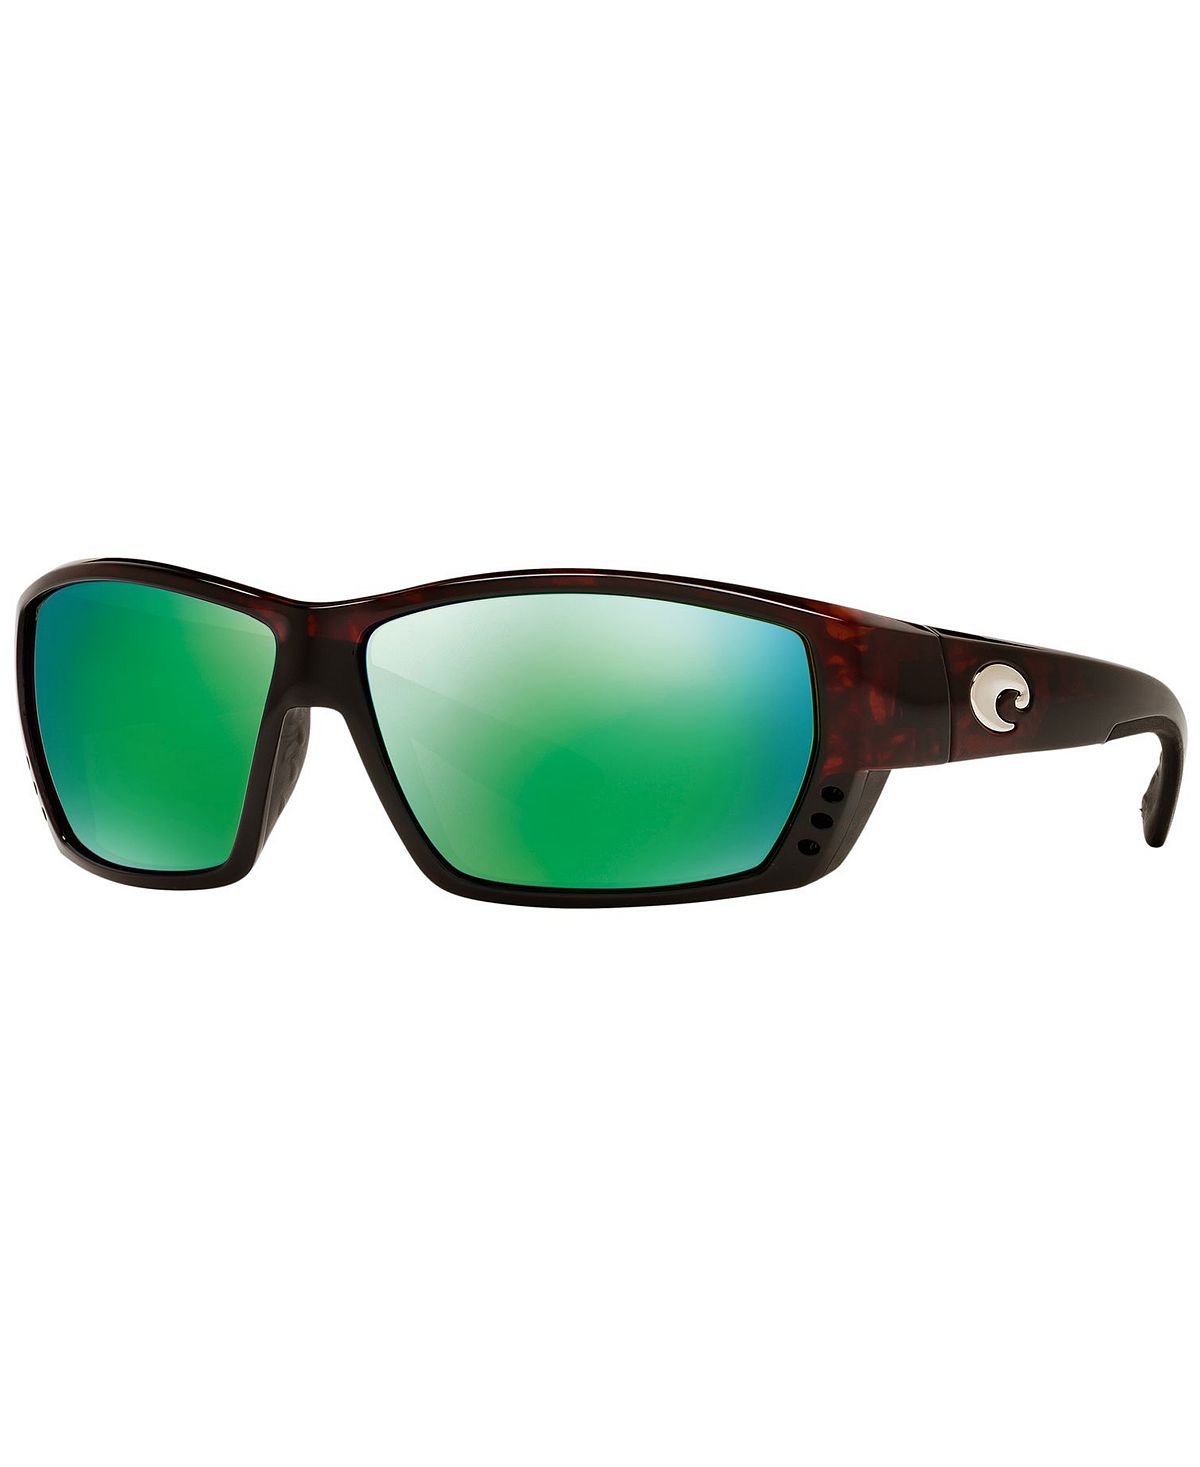 costa del mar permit 580 p tortoise green mirror Поляризованные солнцезащитные очки, TUNA ALLEY Costa Del Mar